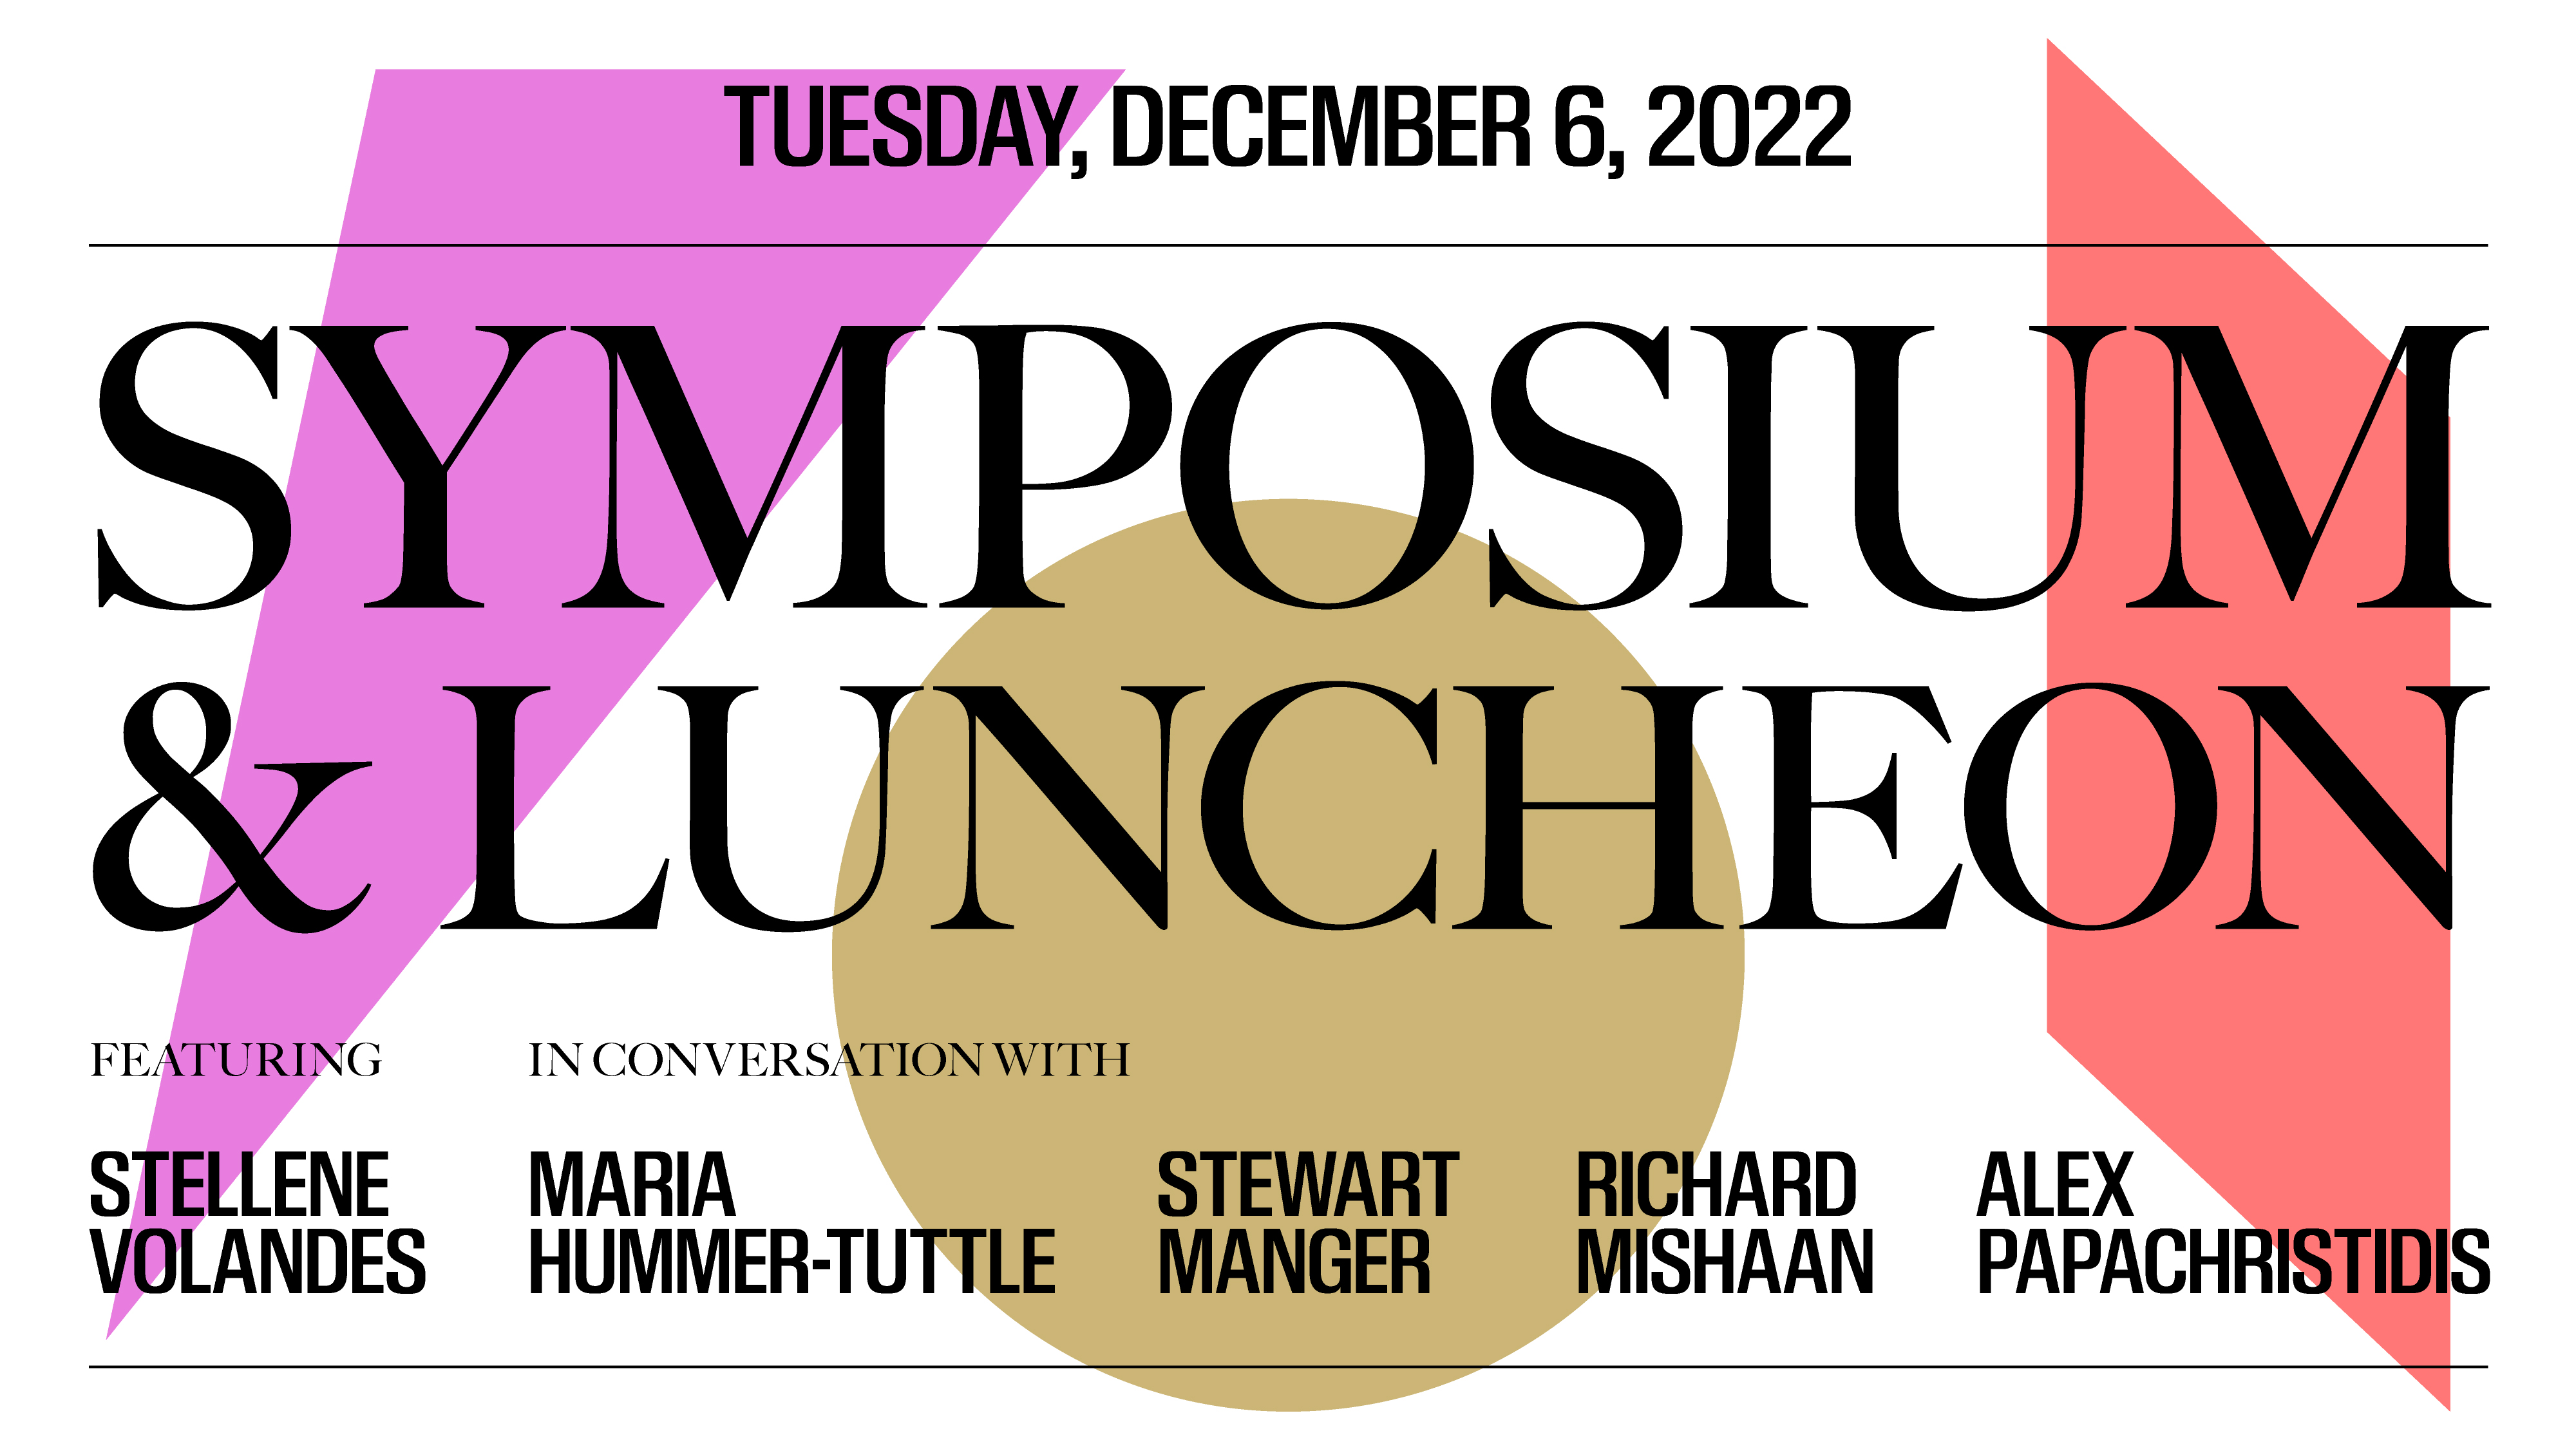 2022 Symposium & Luncheon